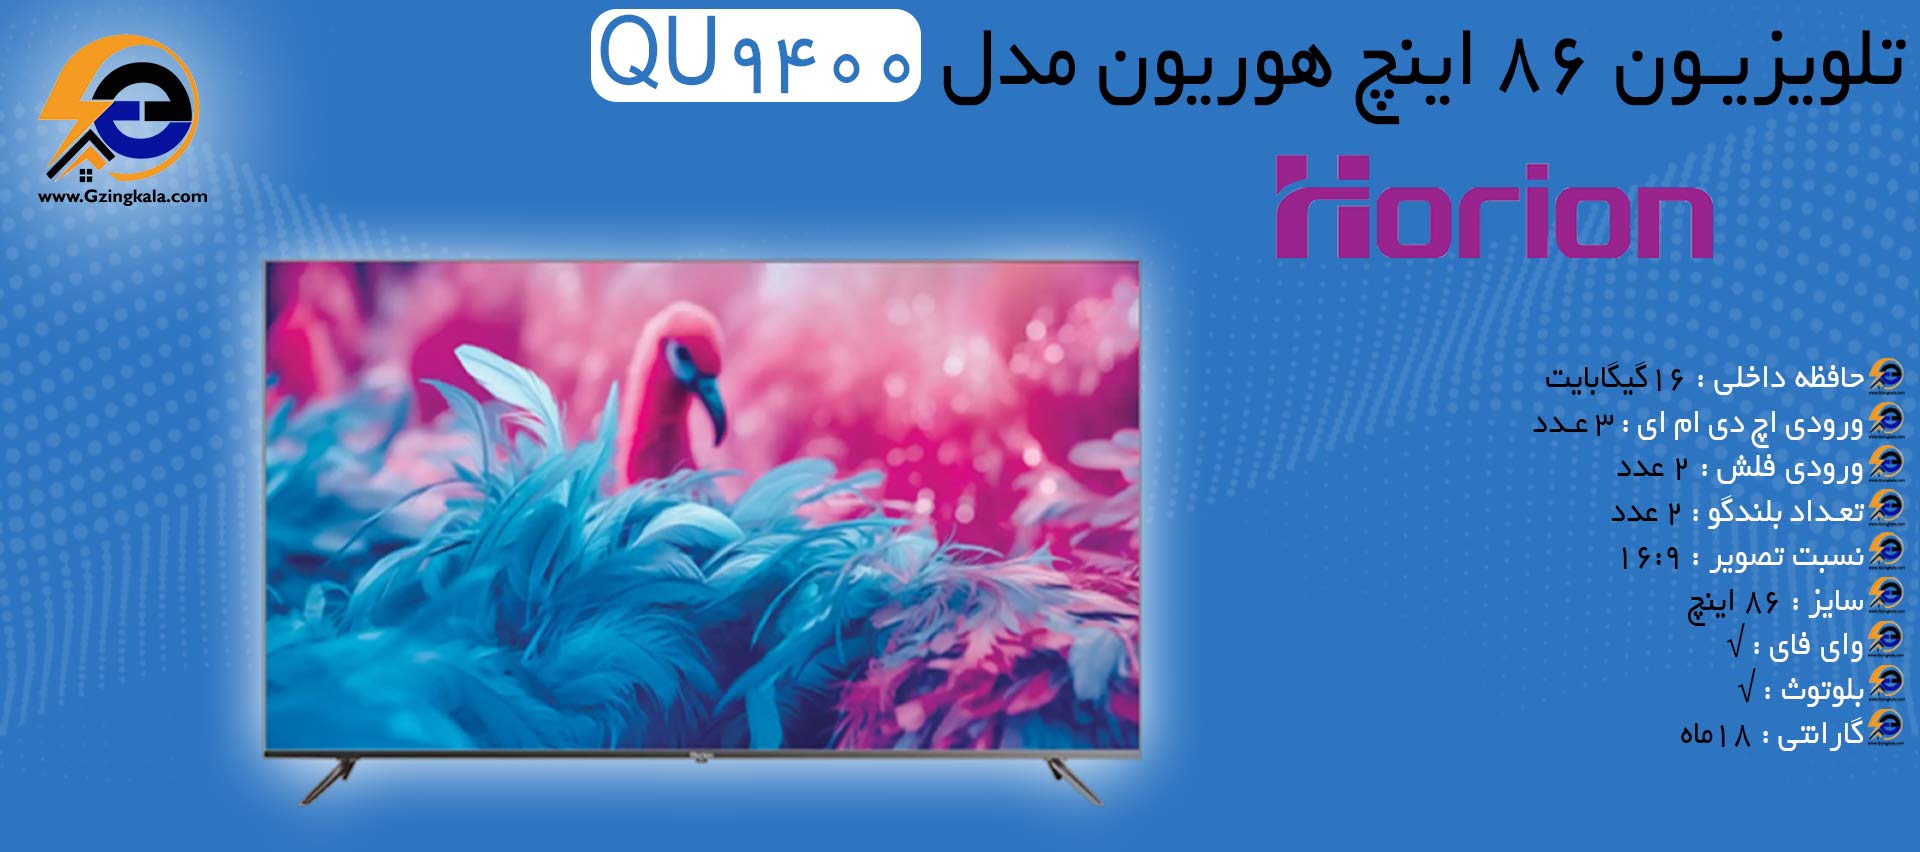 قیمت تلویزیون 86 اینچ هوریون مدل QU9400